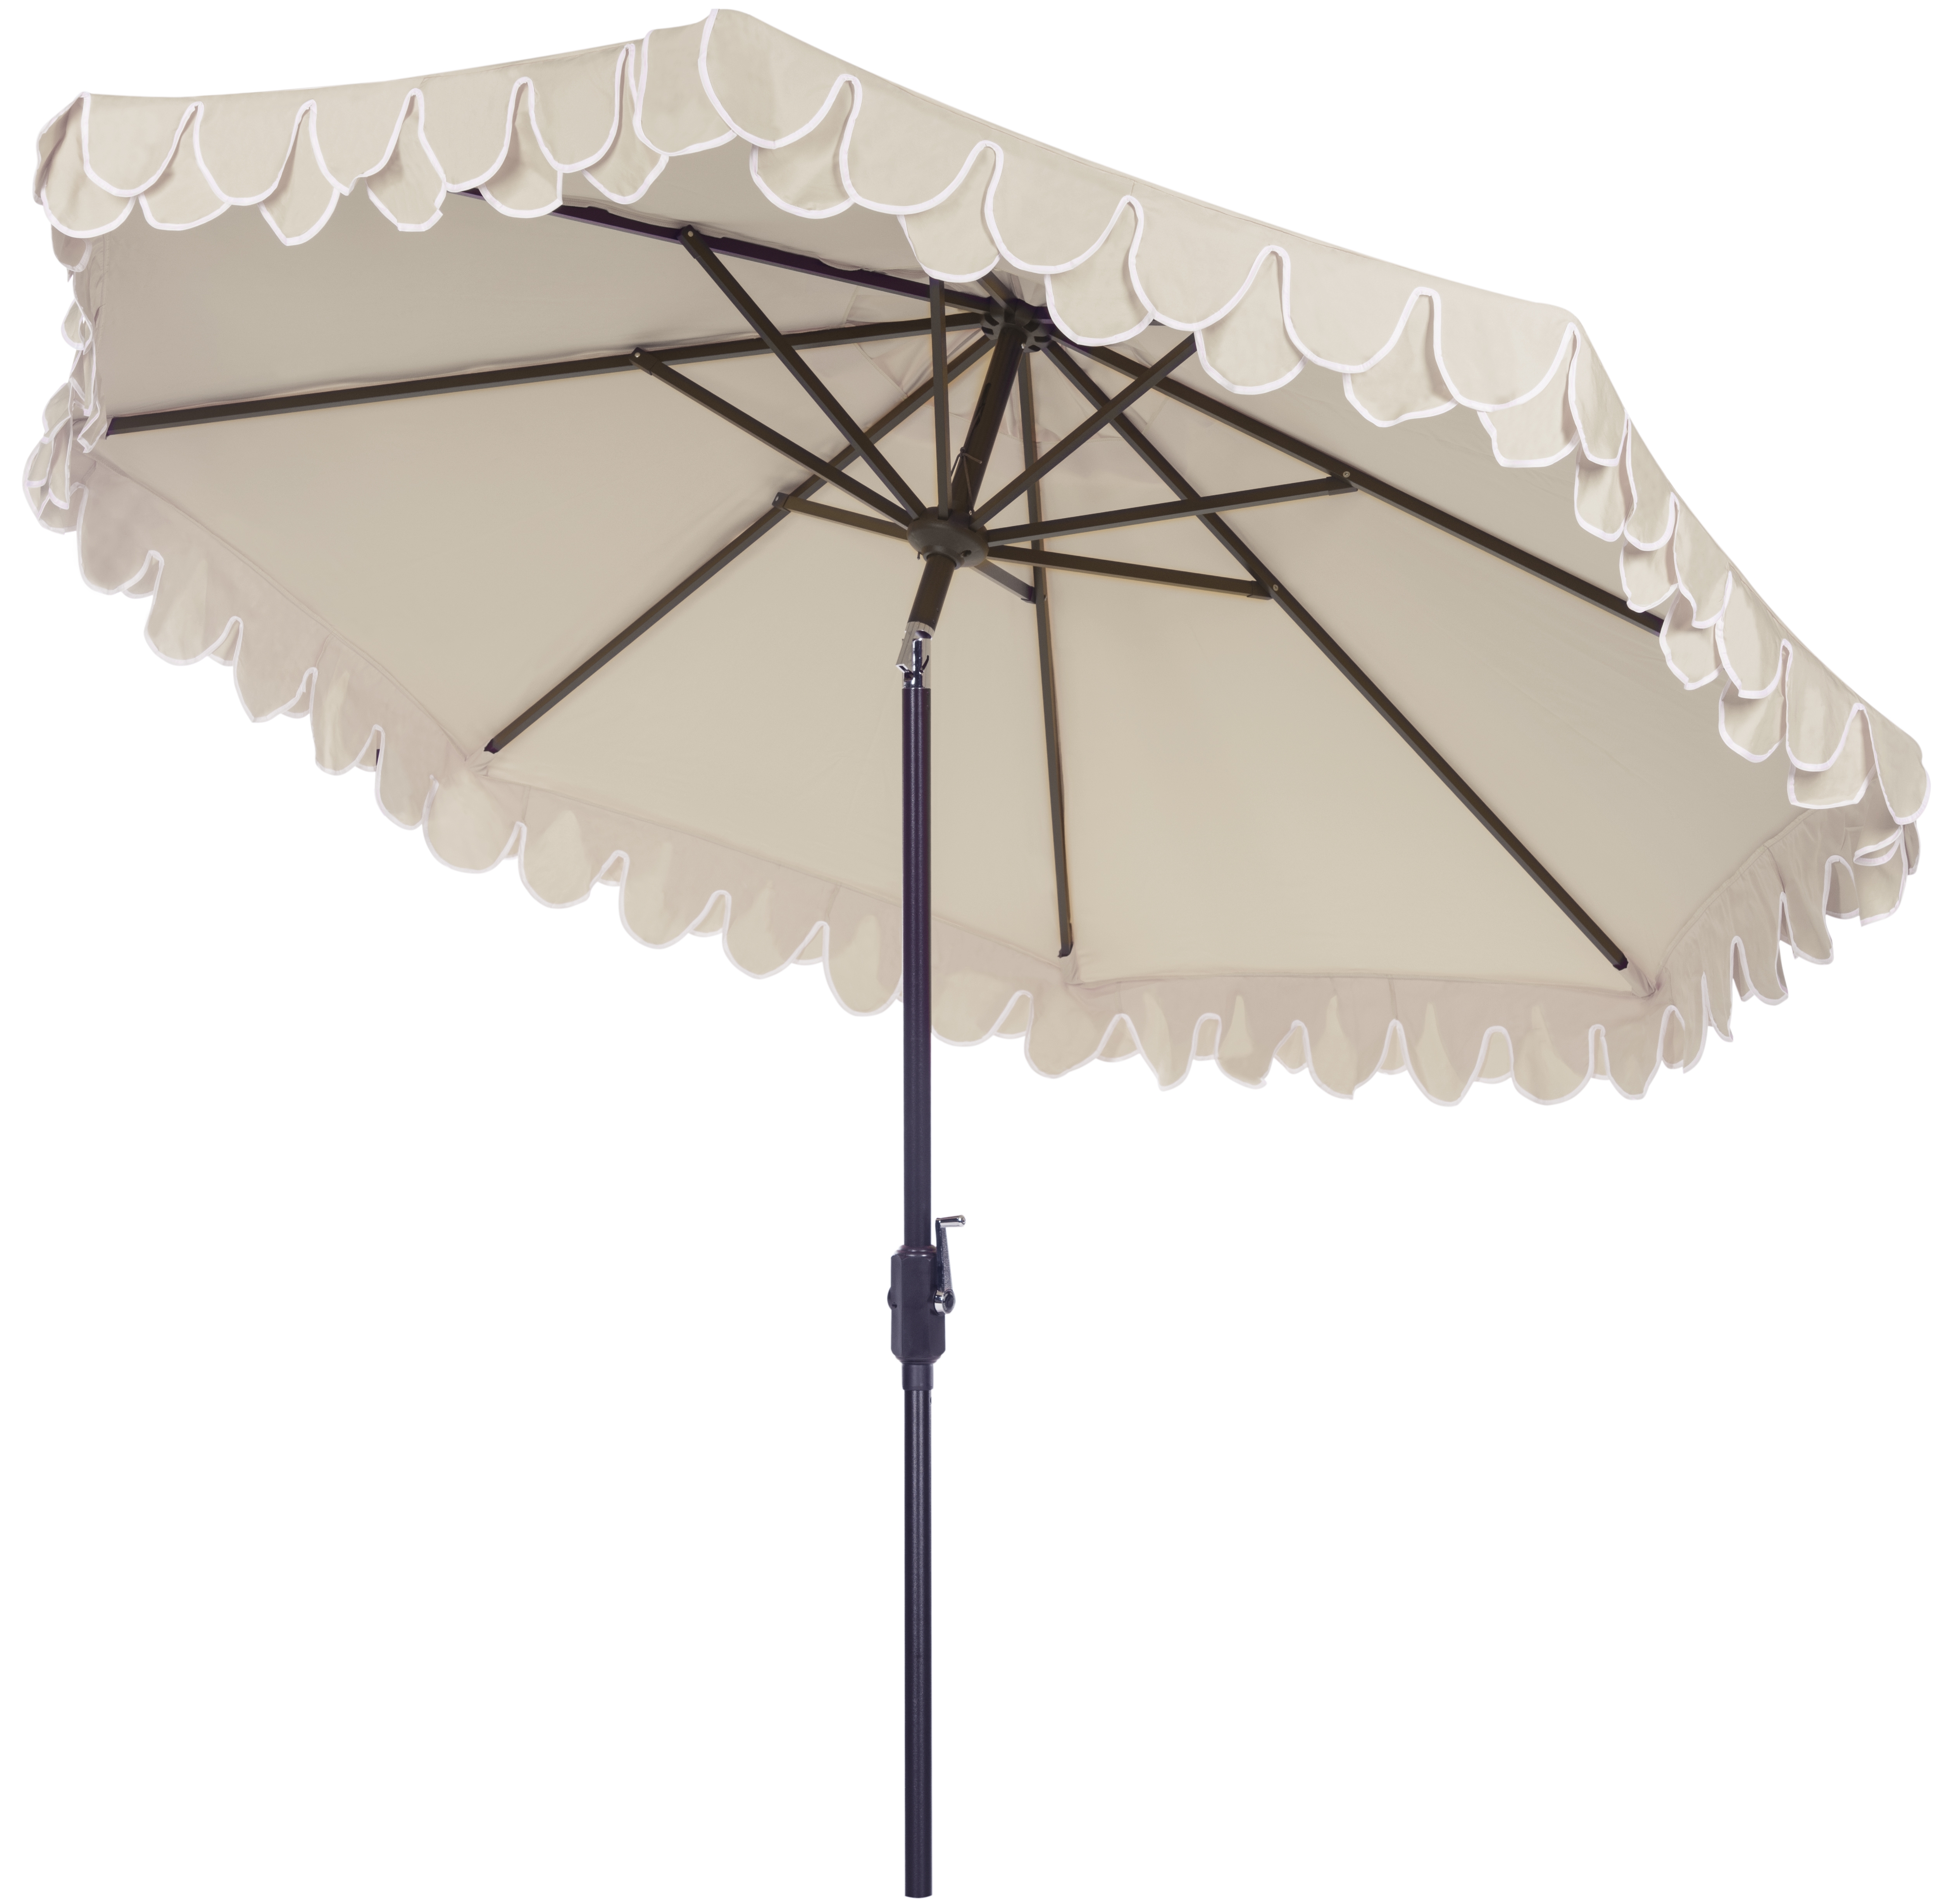 Uv Resistant Elegant Valance 9Ft Auto Tilt Umbrella - Beige/White - Safavieh - Image 1